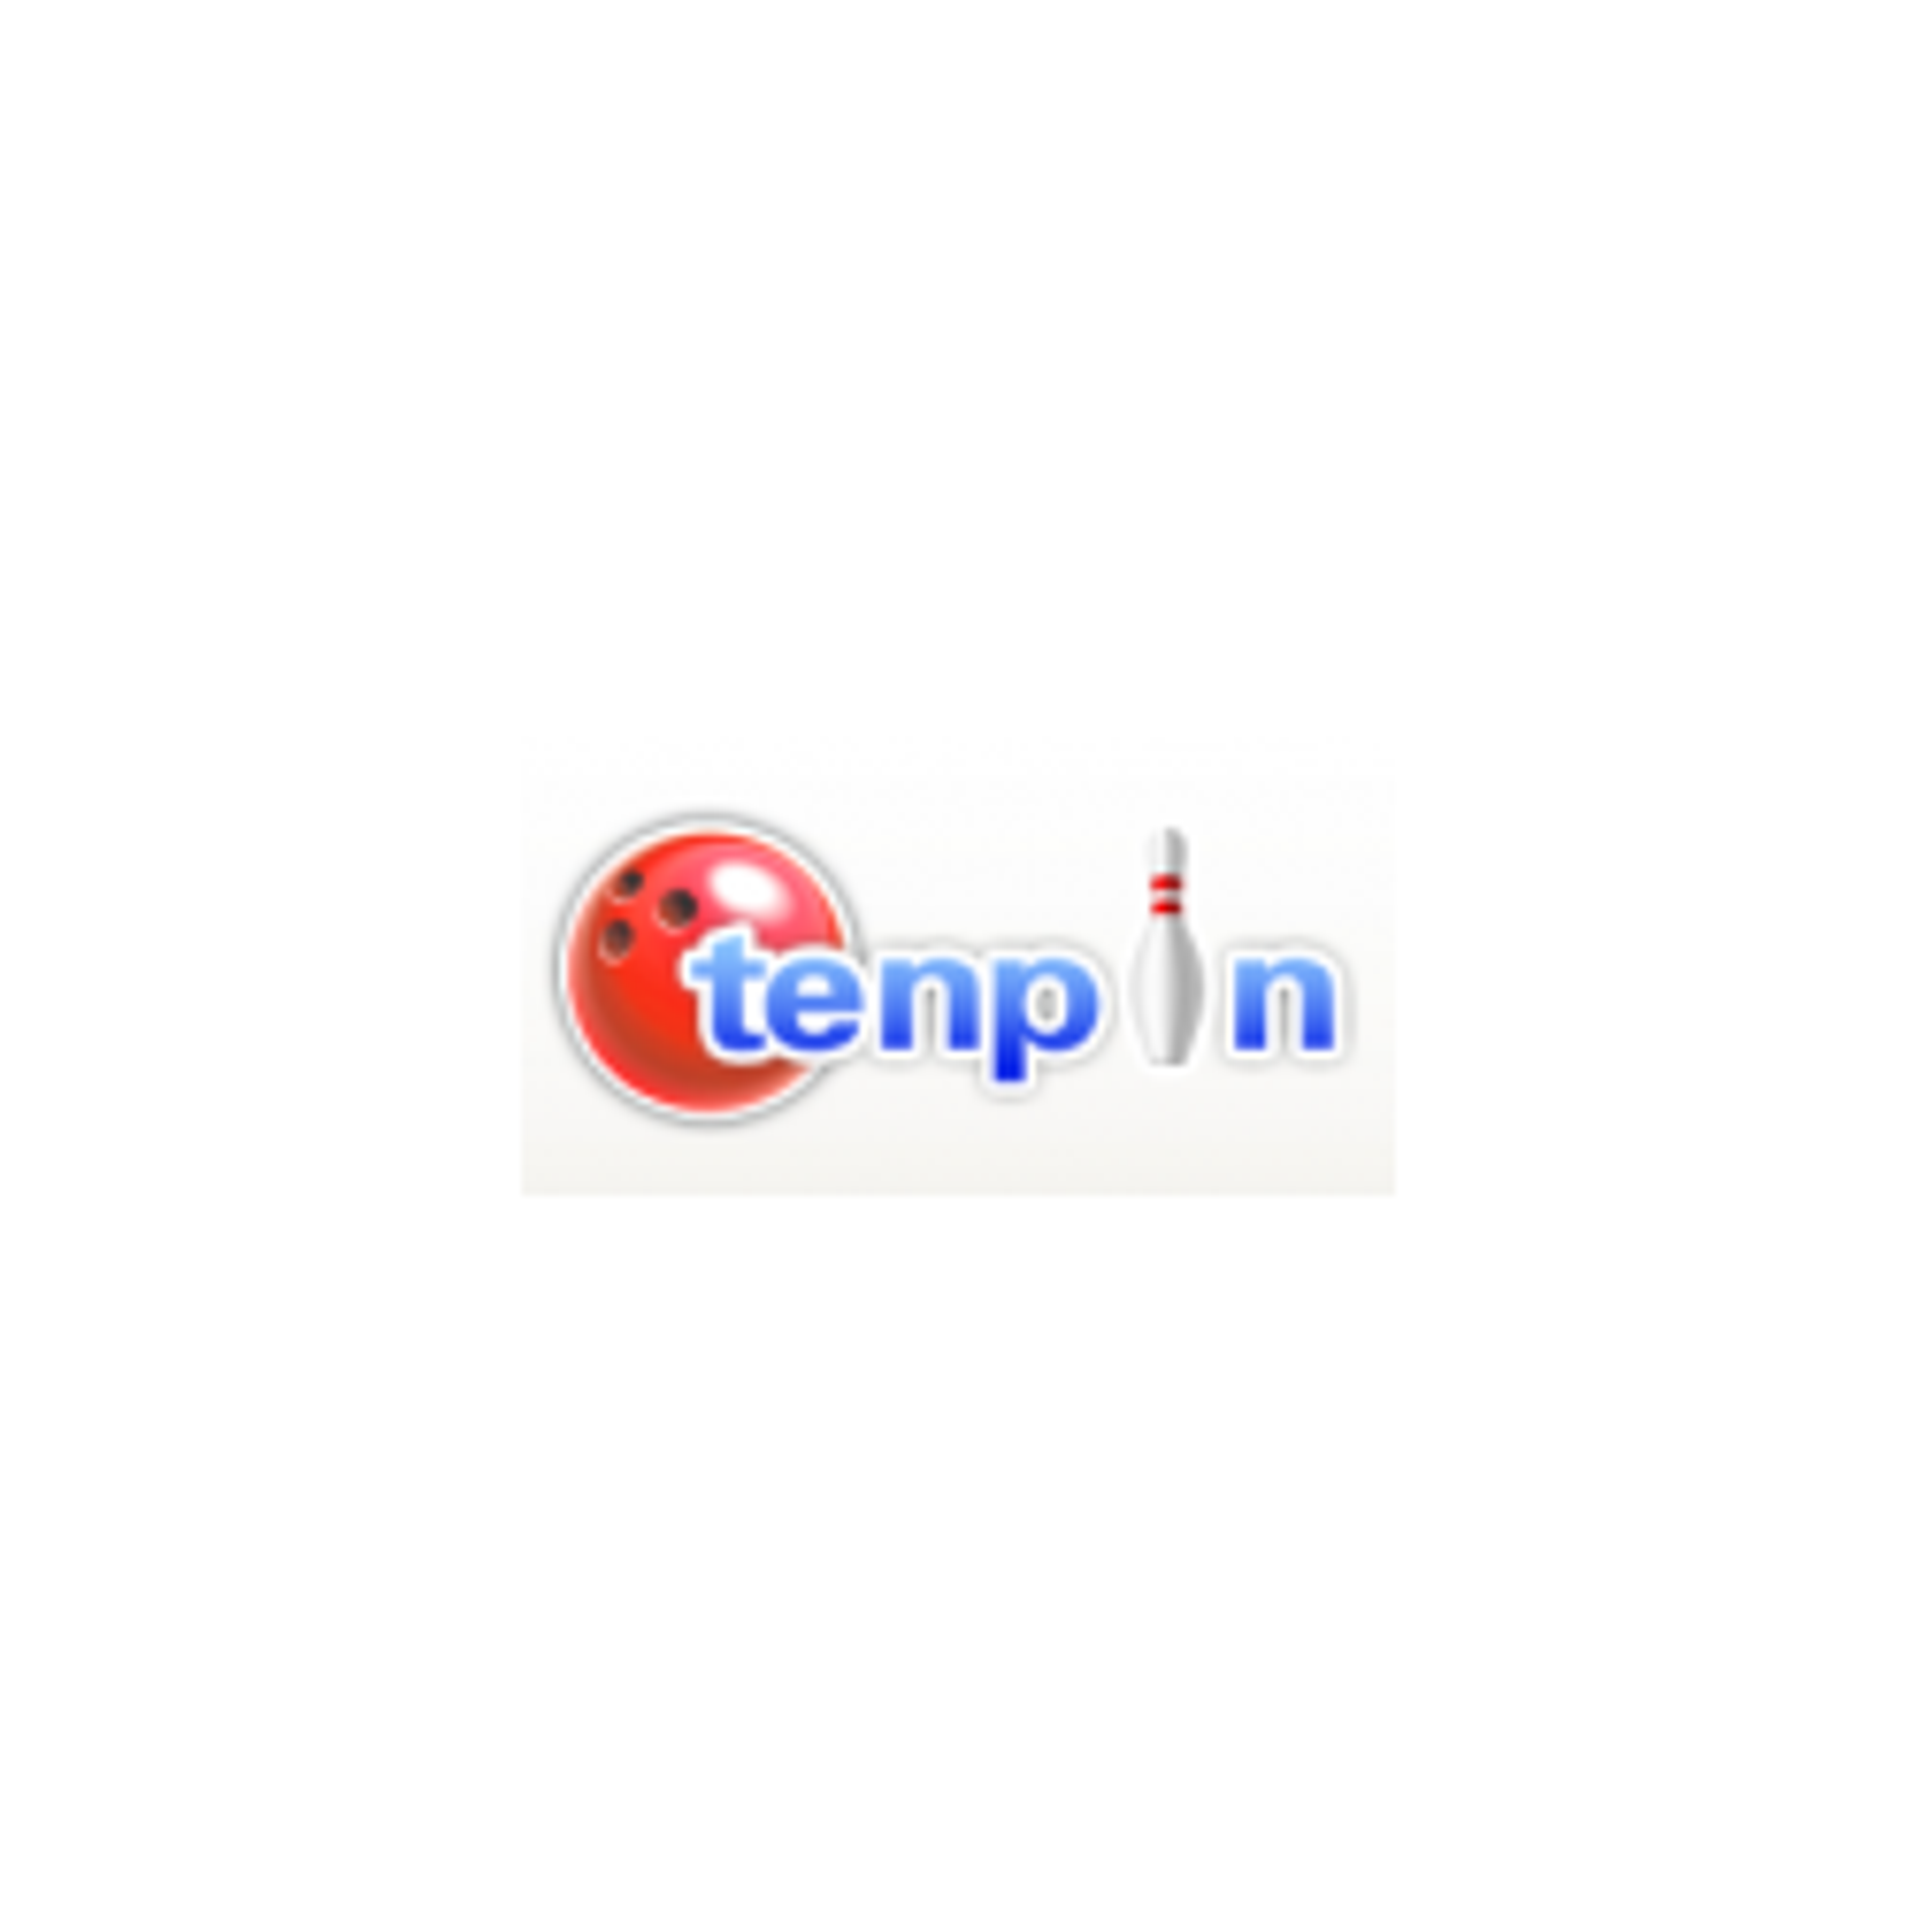  Tenpin 